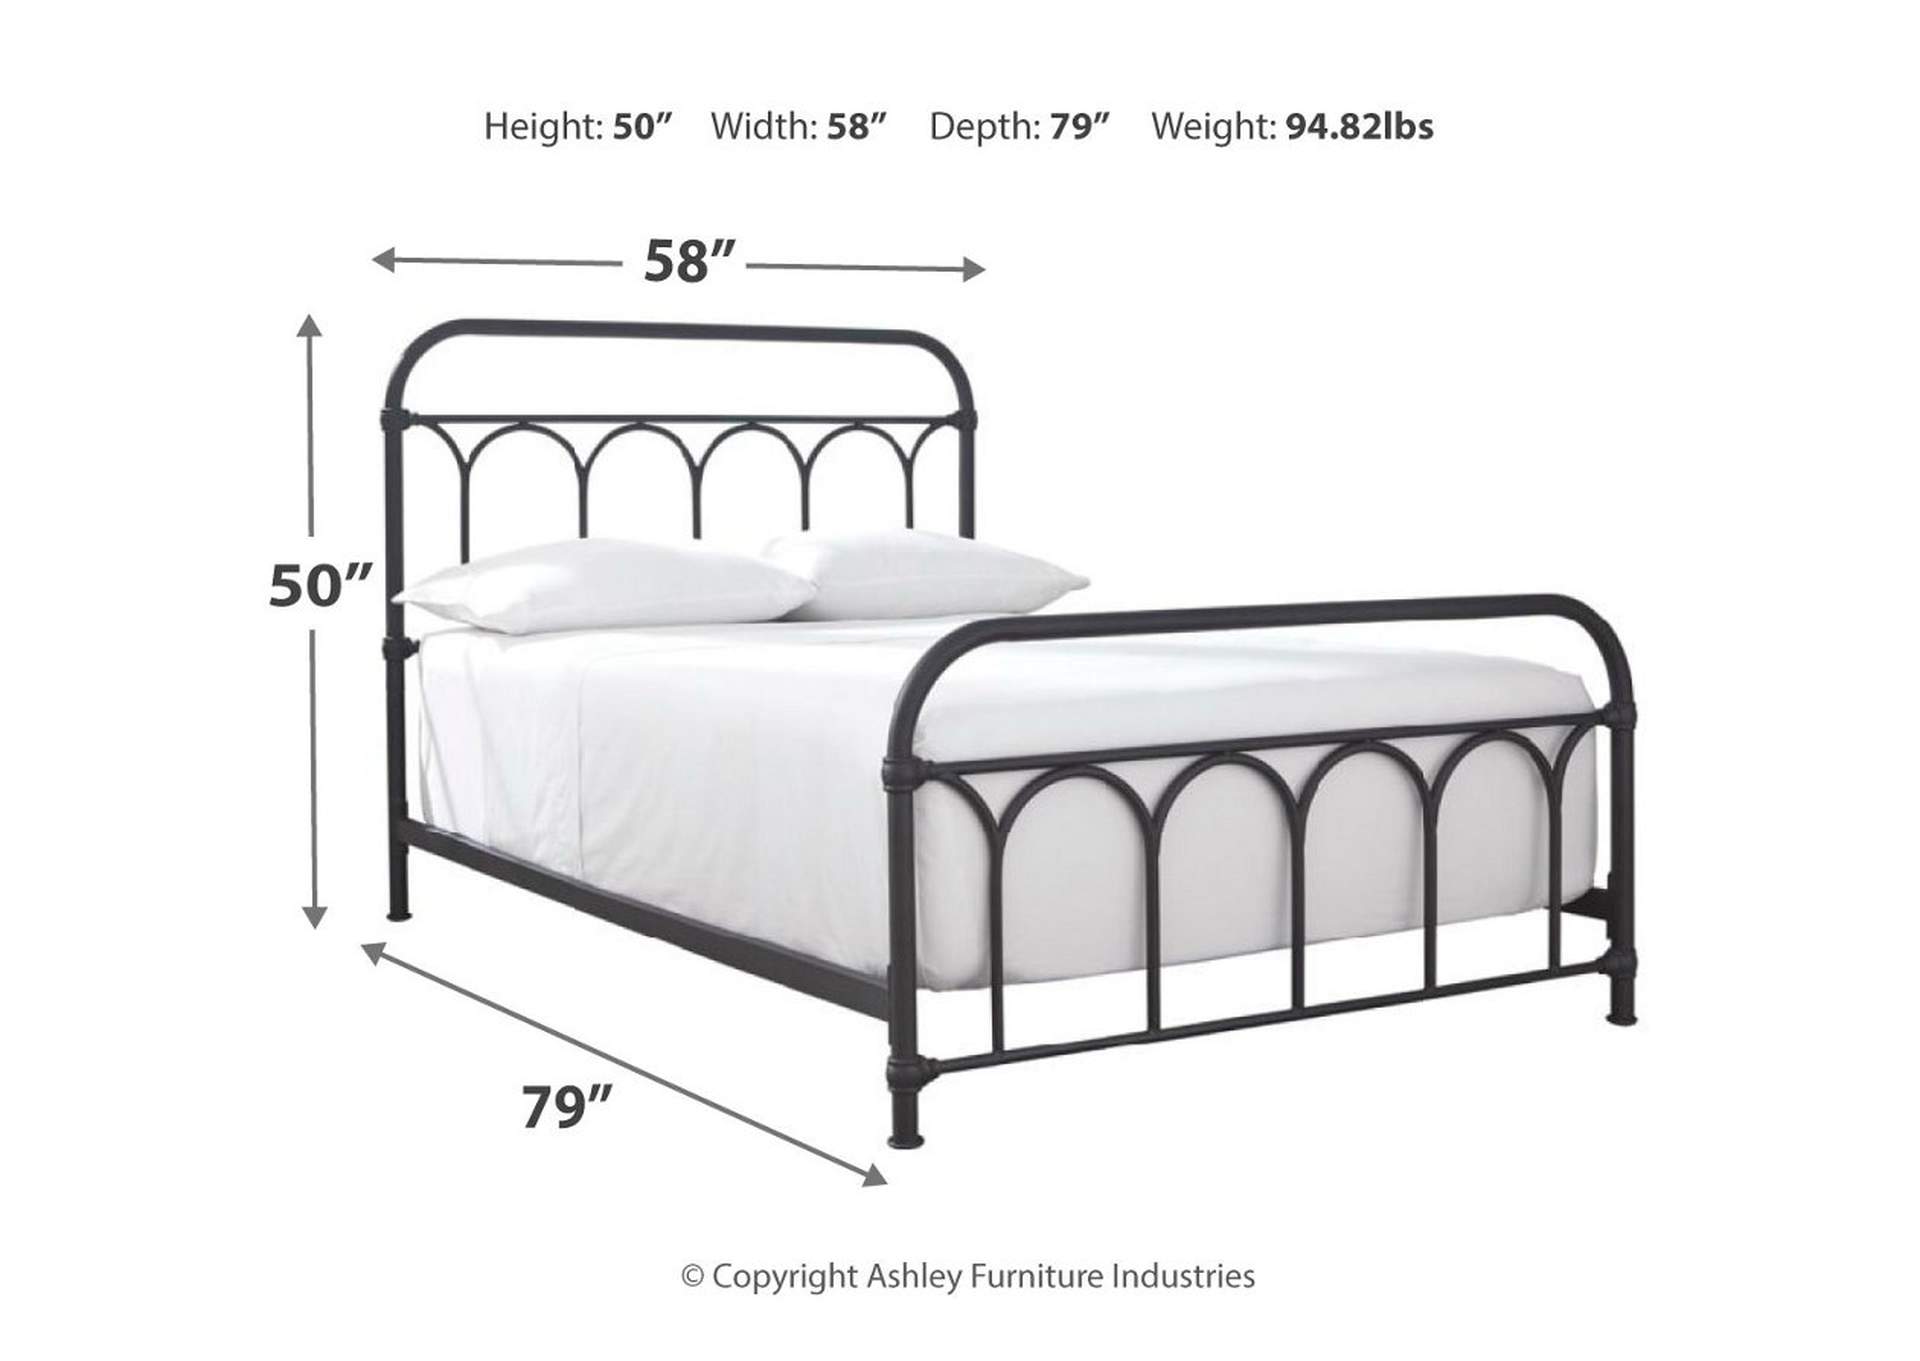 Nashburg Black Full Metal Bed,Direct To Consumer Express